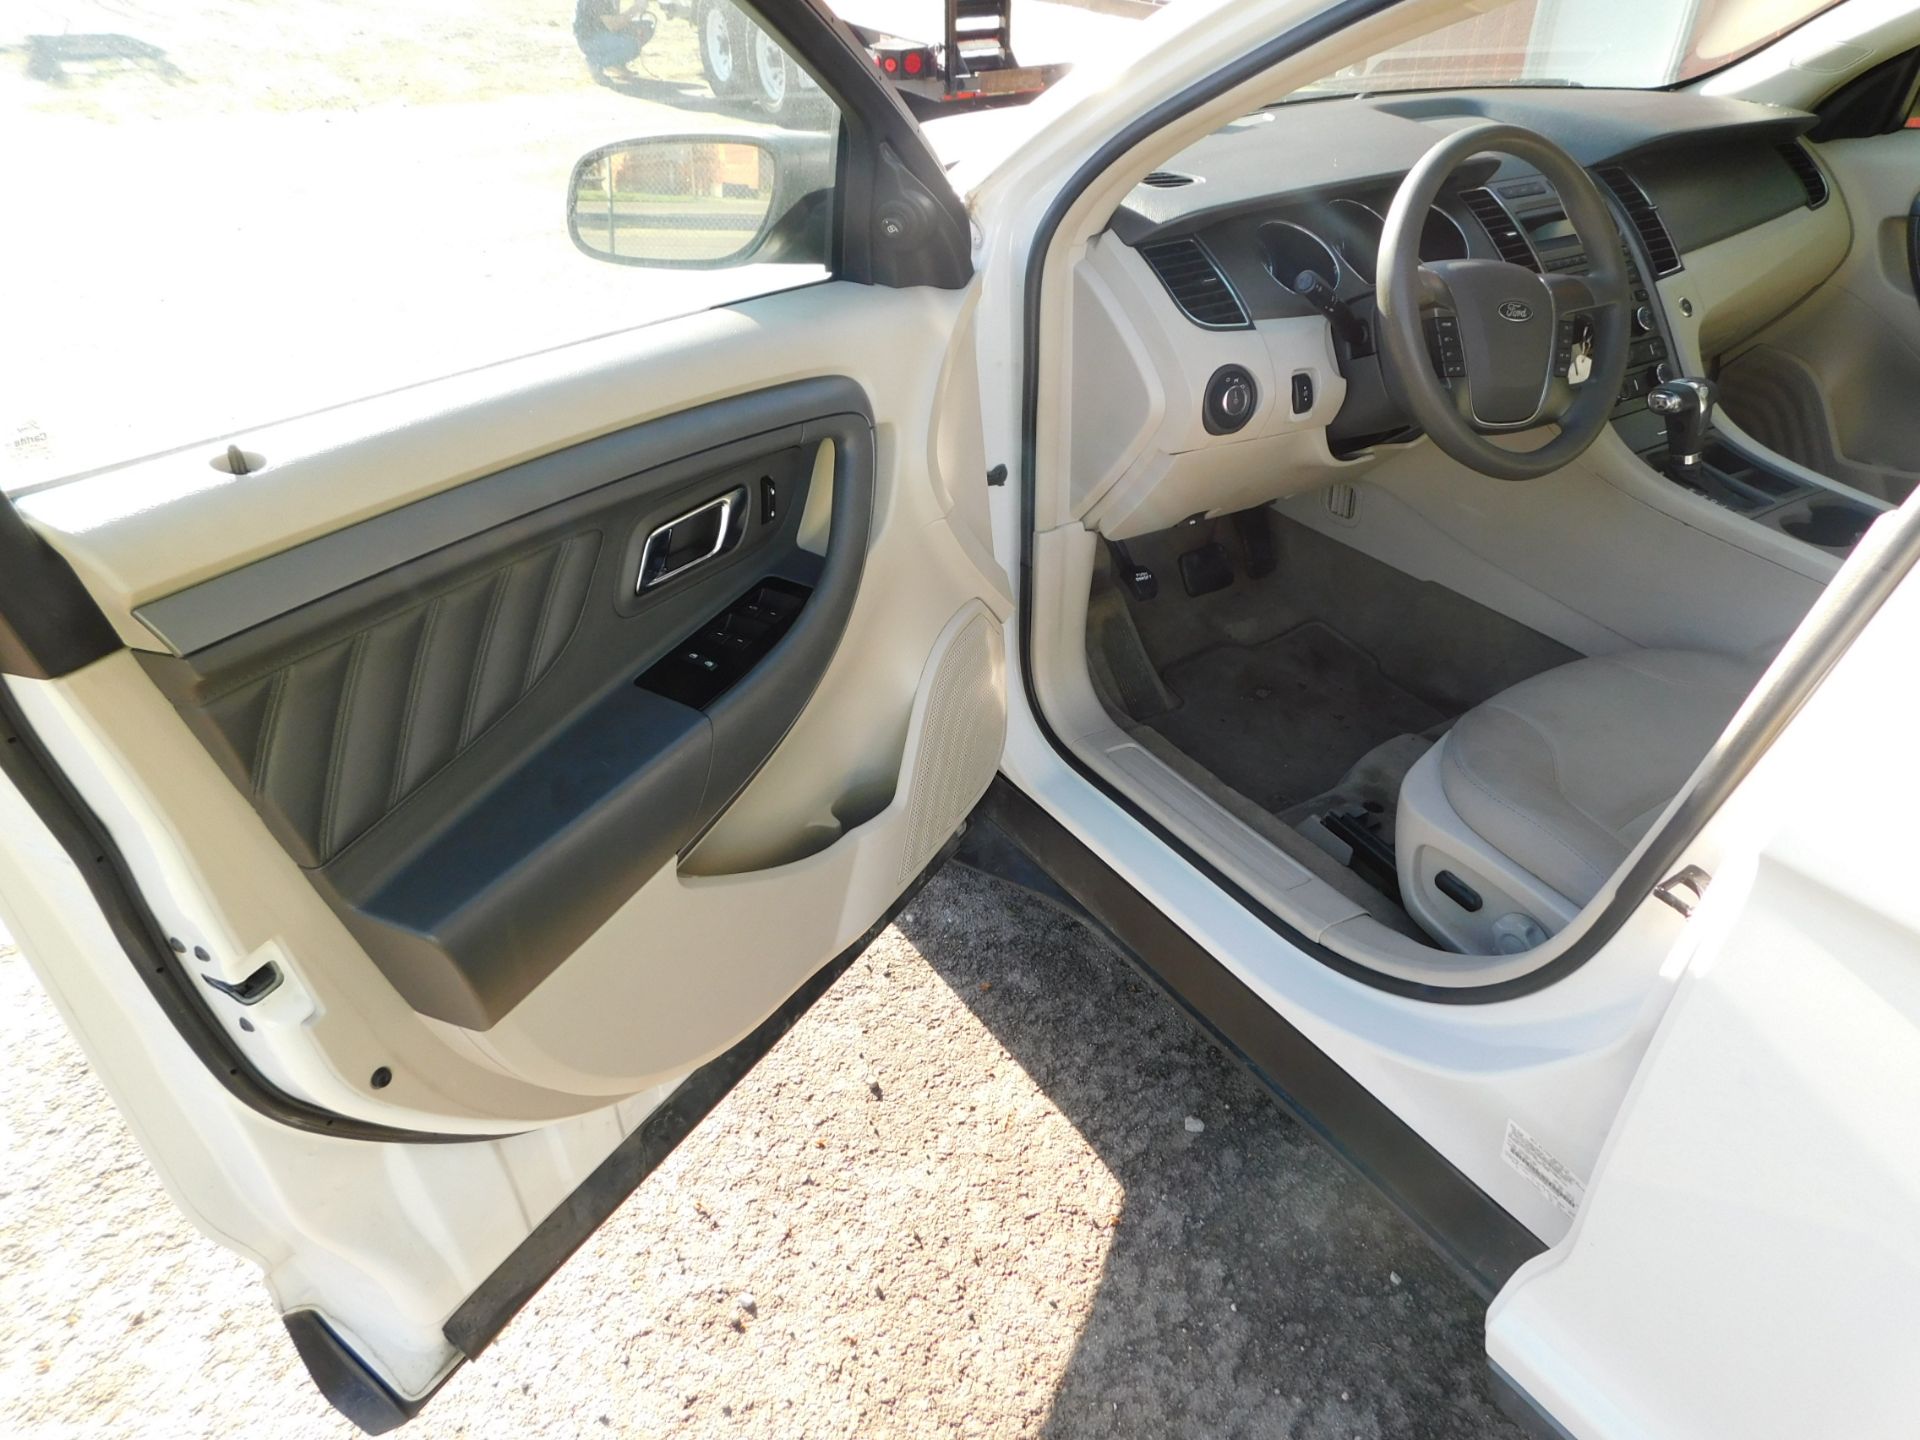 2011 Ford Taurus 4-Door Sedan vin 1FAHP2DWXBG163330, Automatic Transmission, PW,PL, AC, Cloth - Image 22 of 41